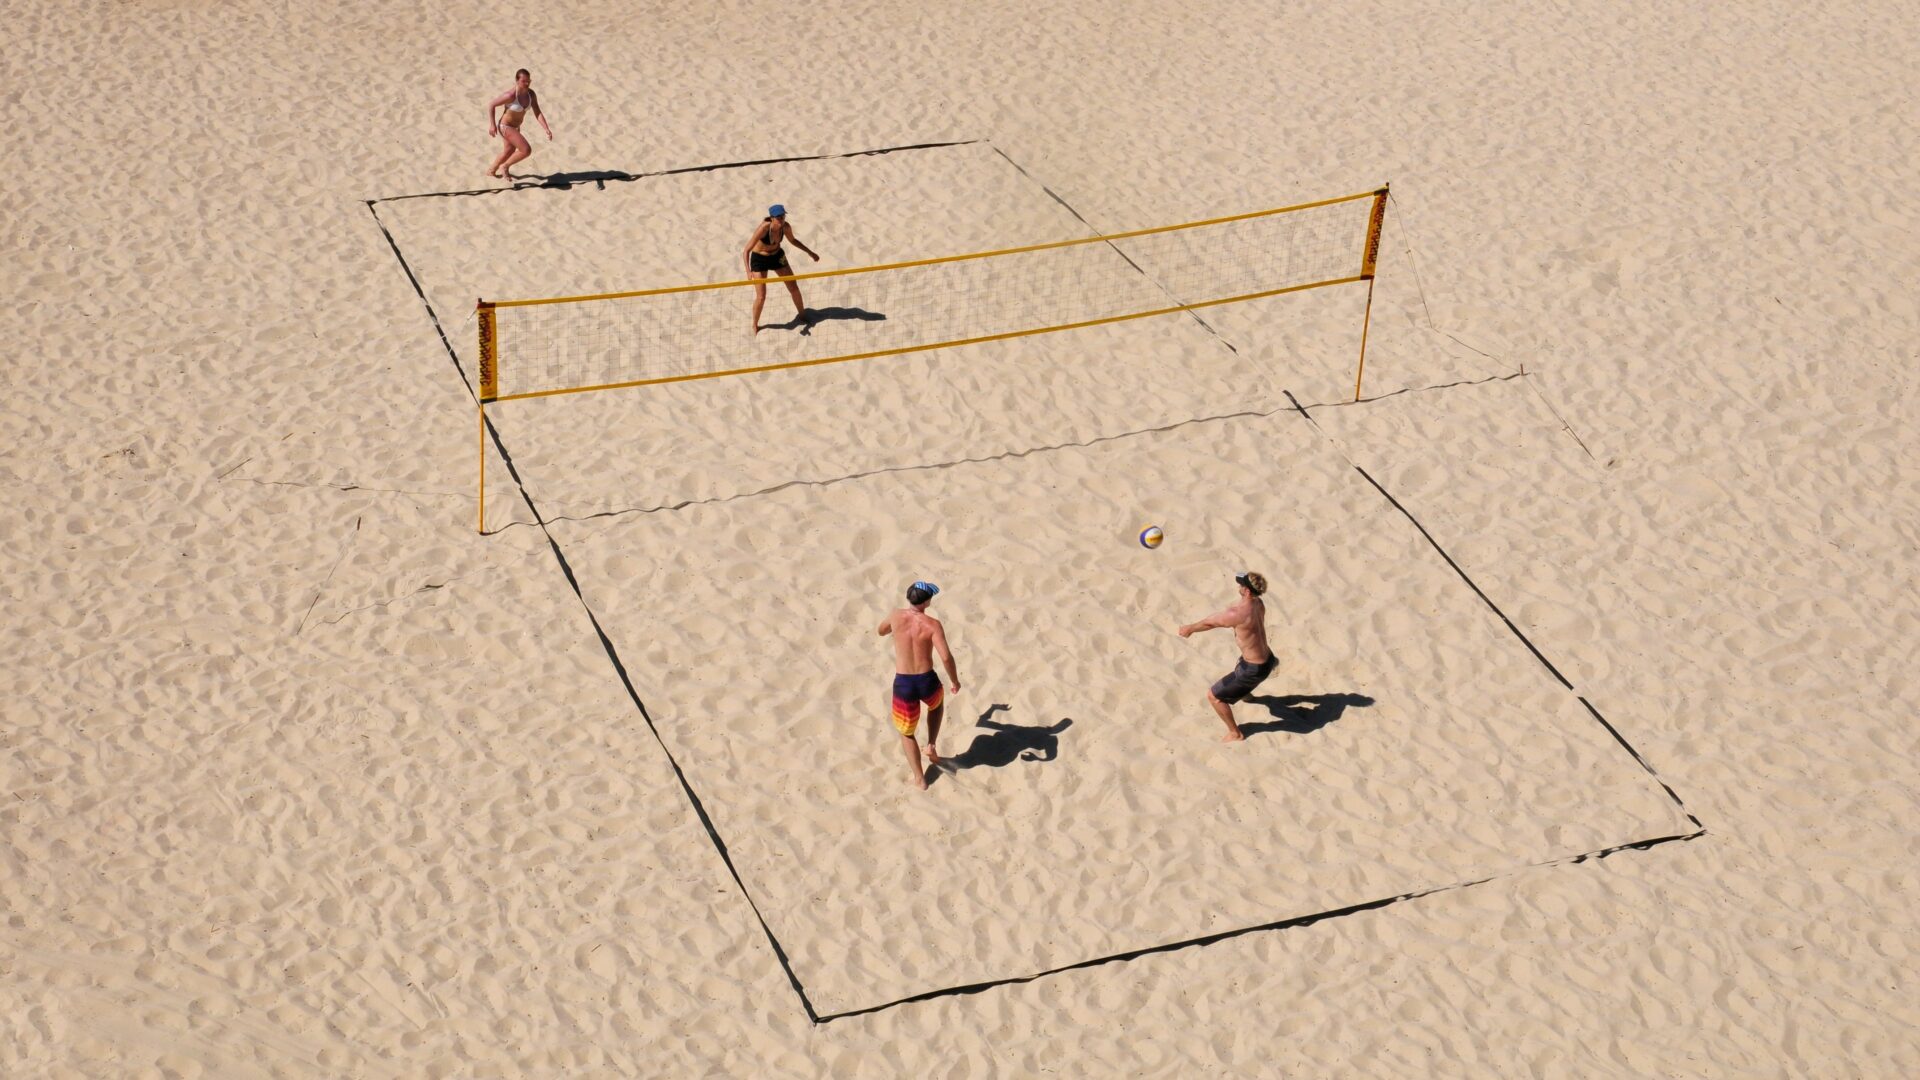 Beach Sports (volleyball)